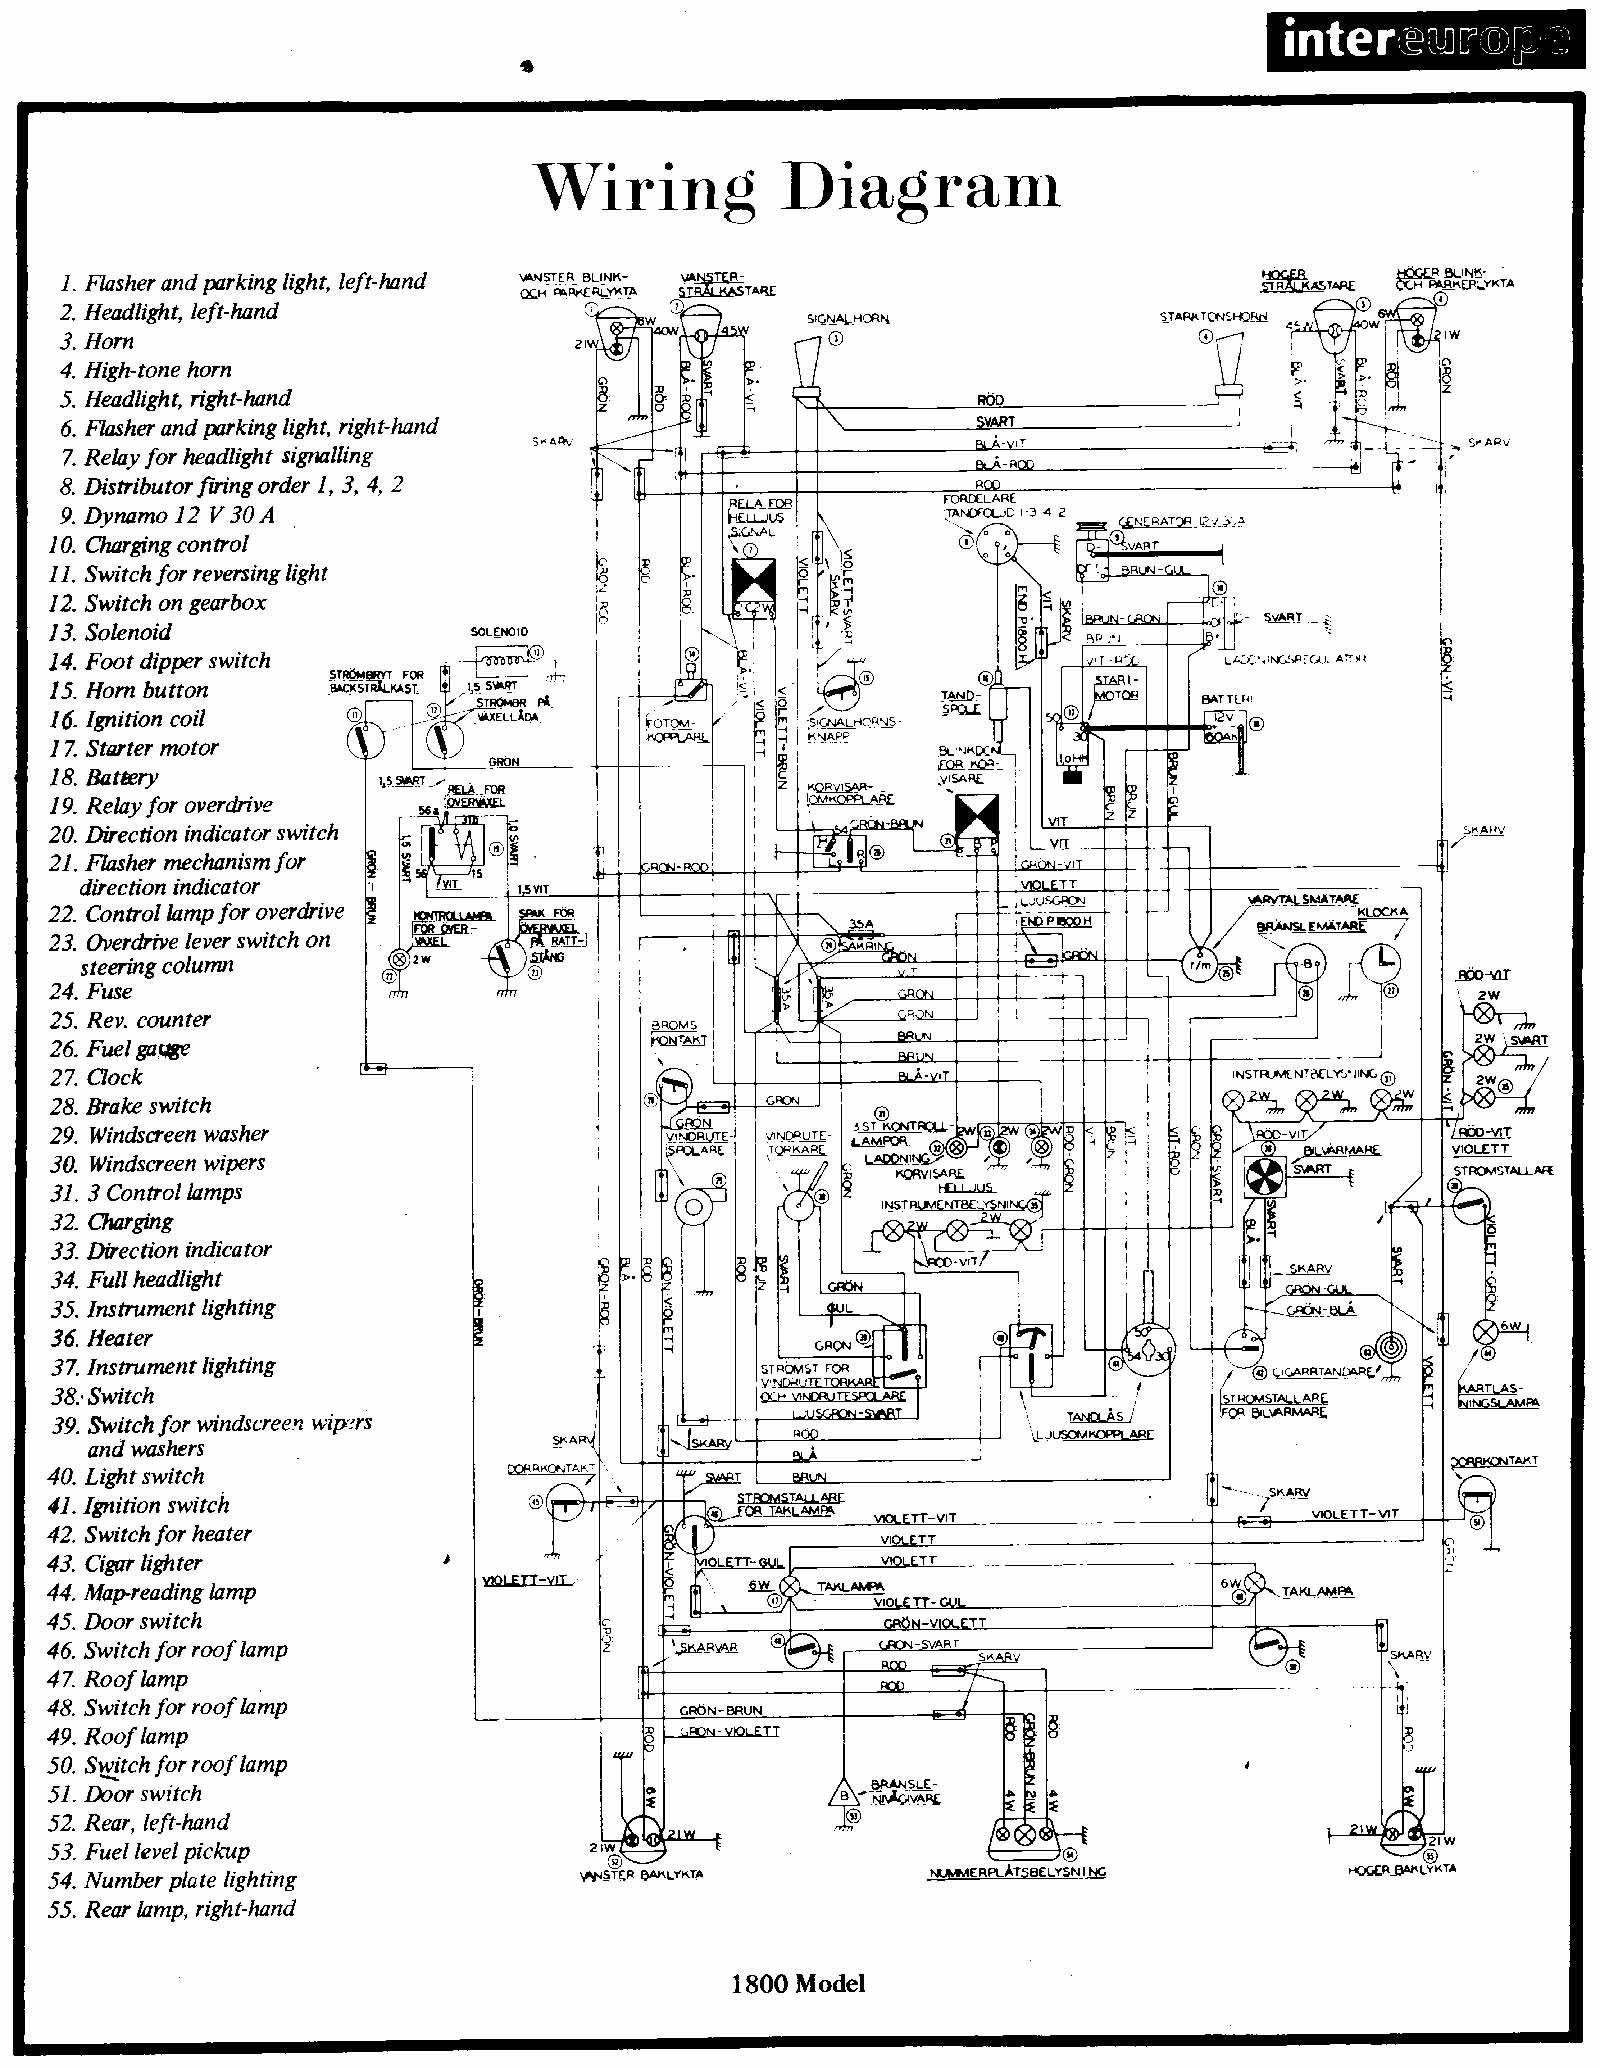 41 1999 Lexus Es300 Radio Wiring Diagram - Wiring Diagram Source Online